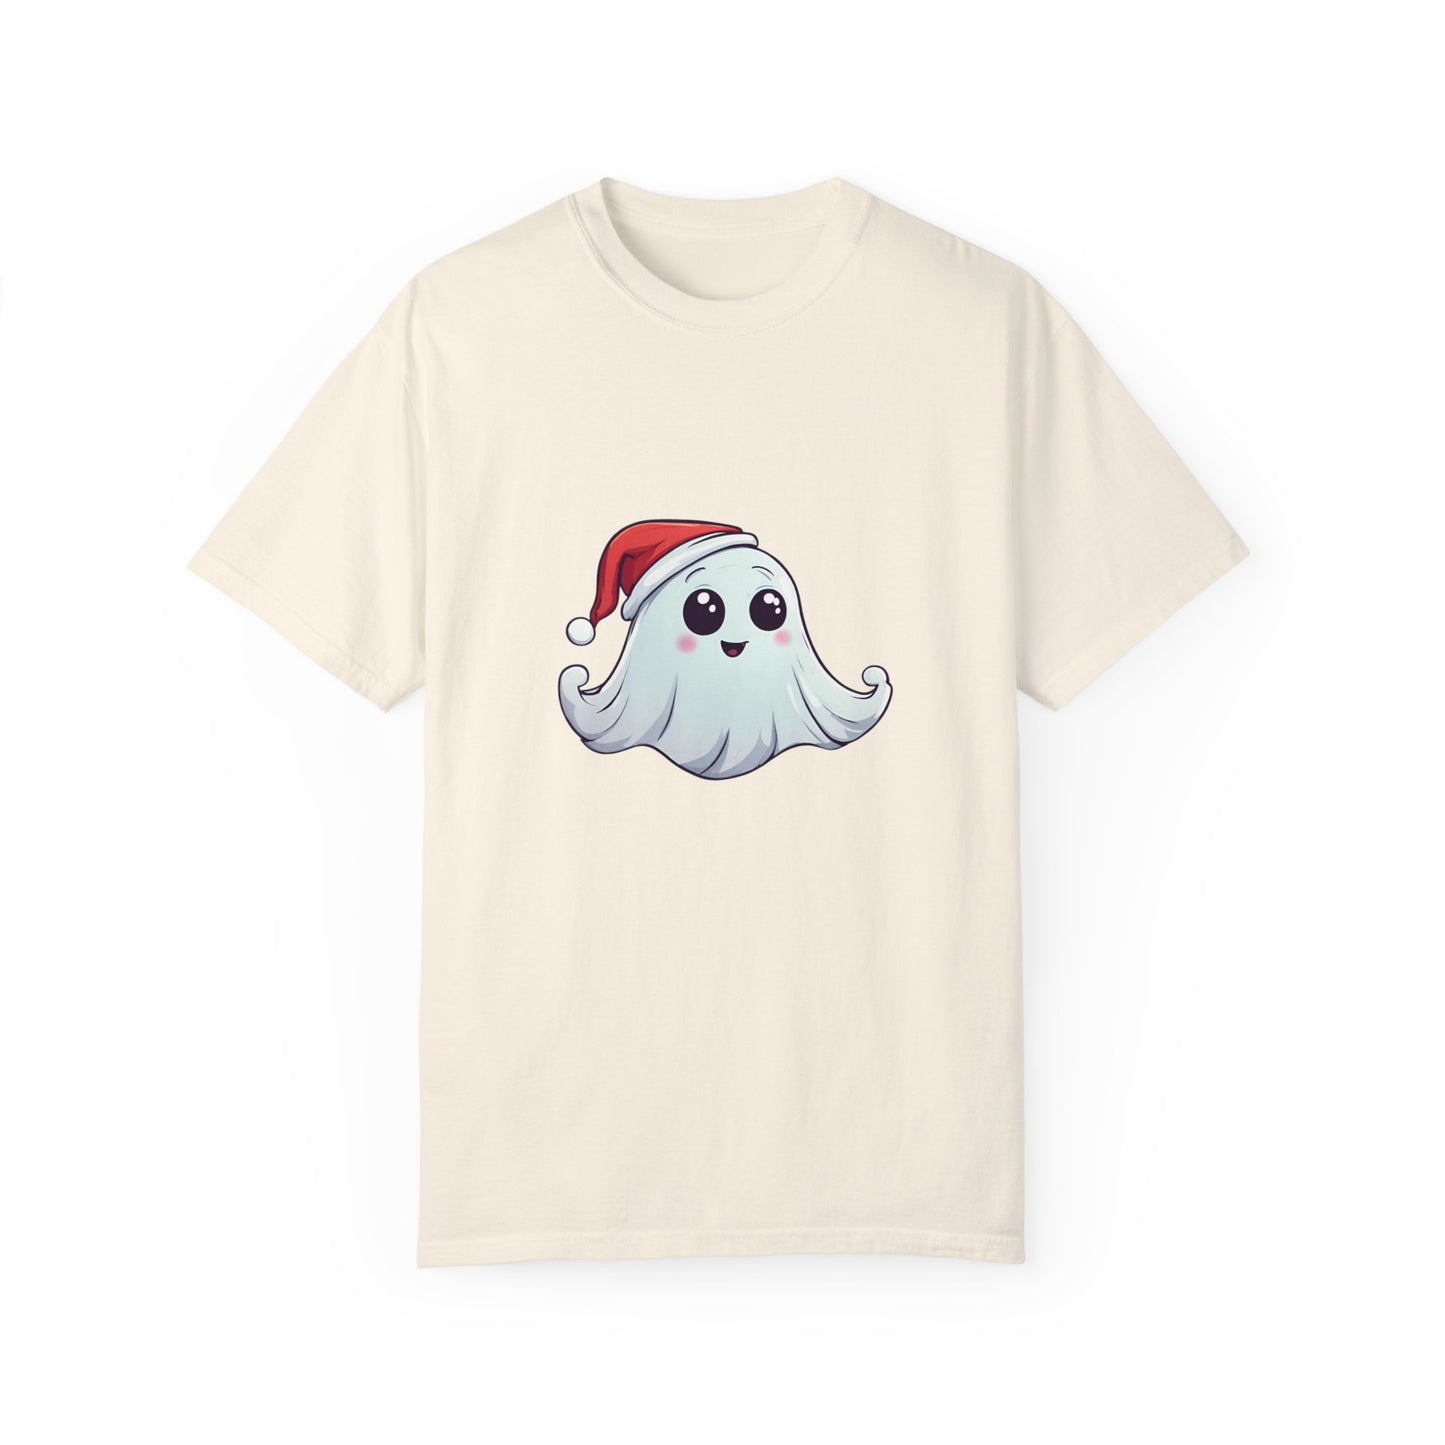 Cute Christina’s ghost t shirt